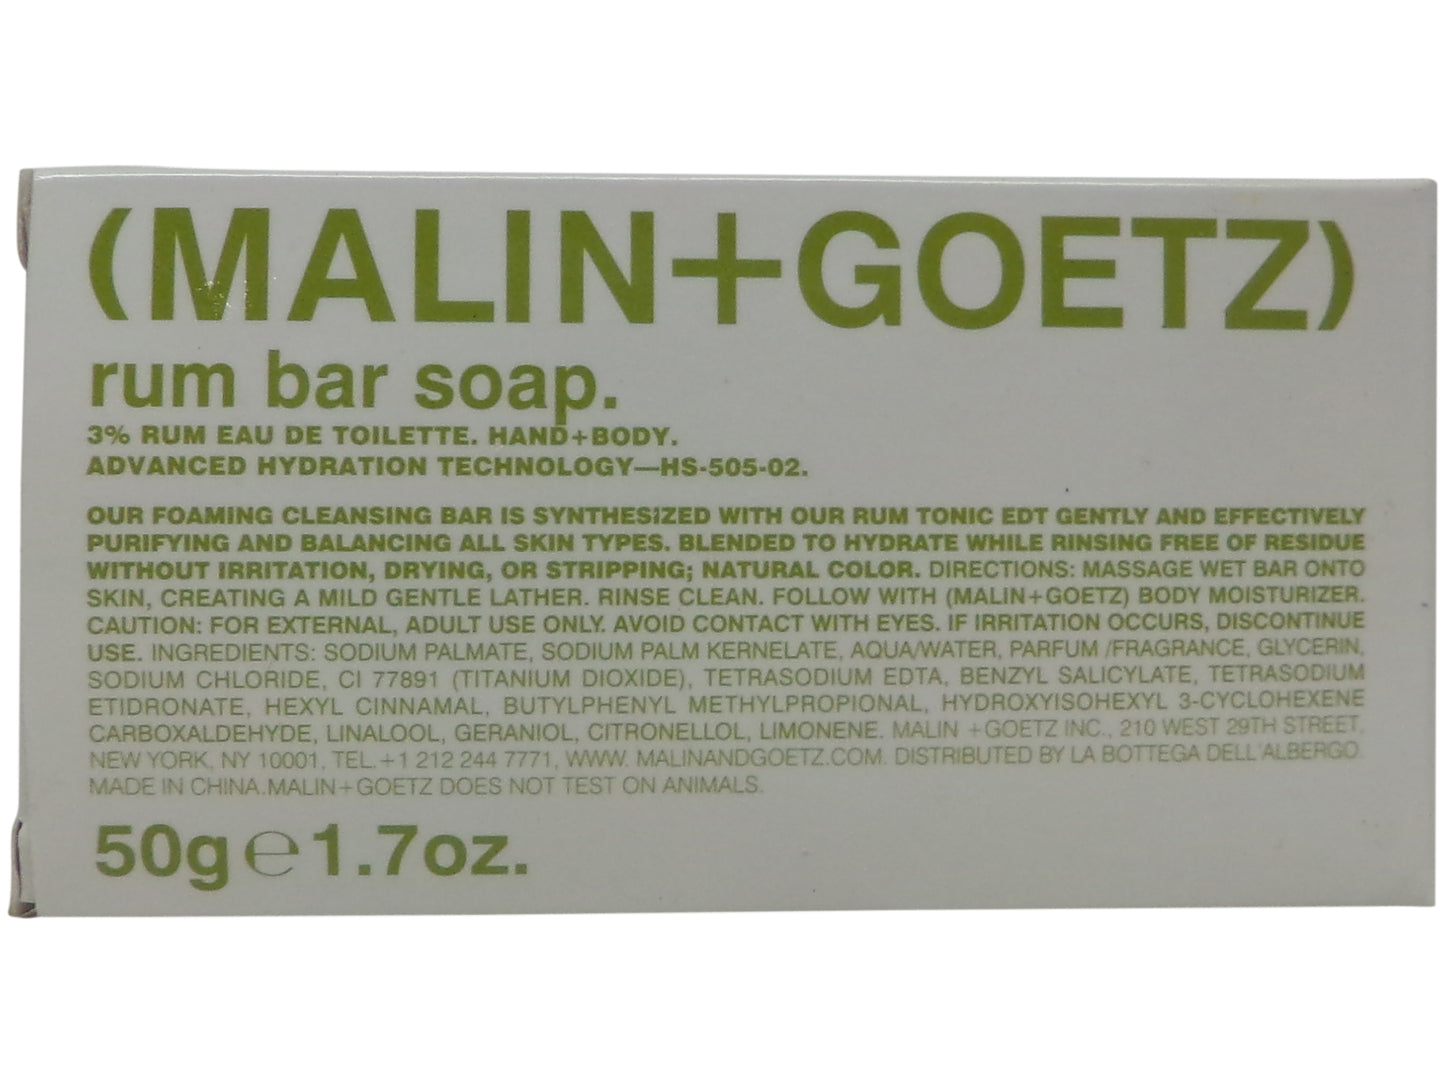 Malin + Goetz rum bar soap lot of 6 each 1.7oz bars. Total of 10.2oz